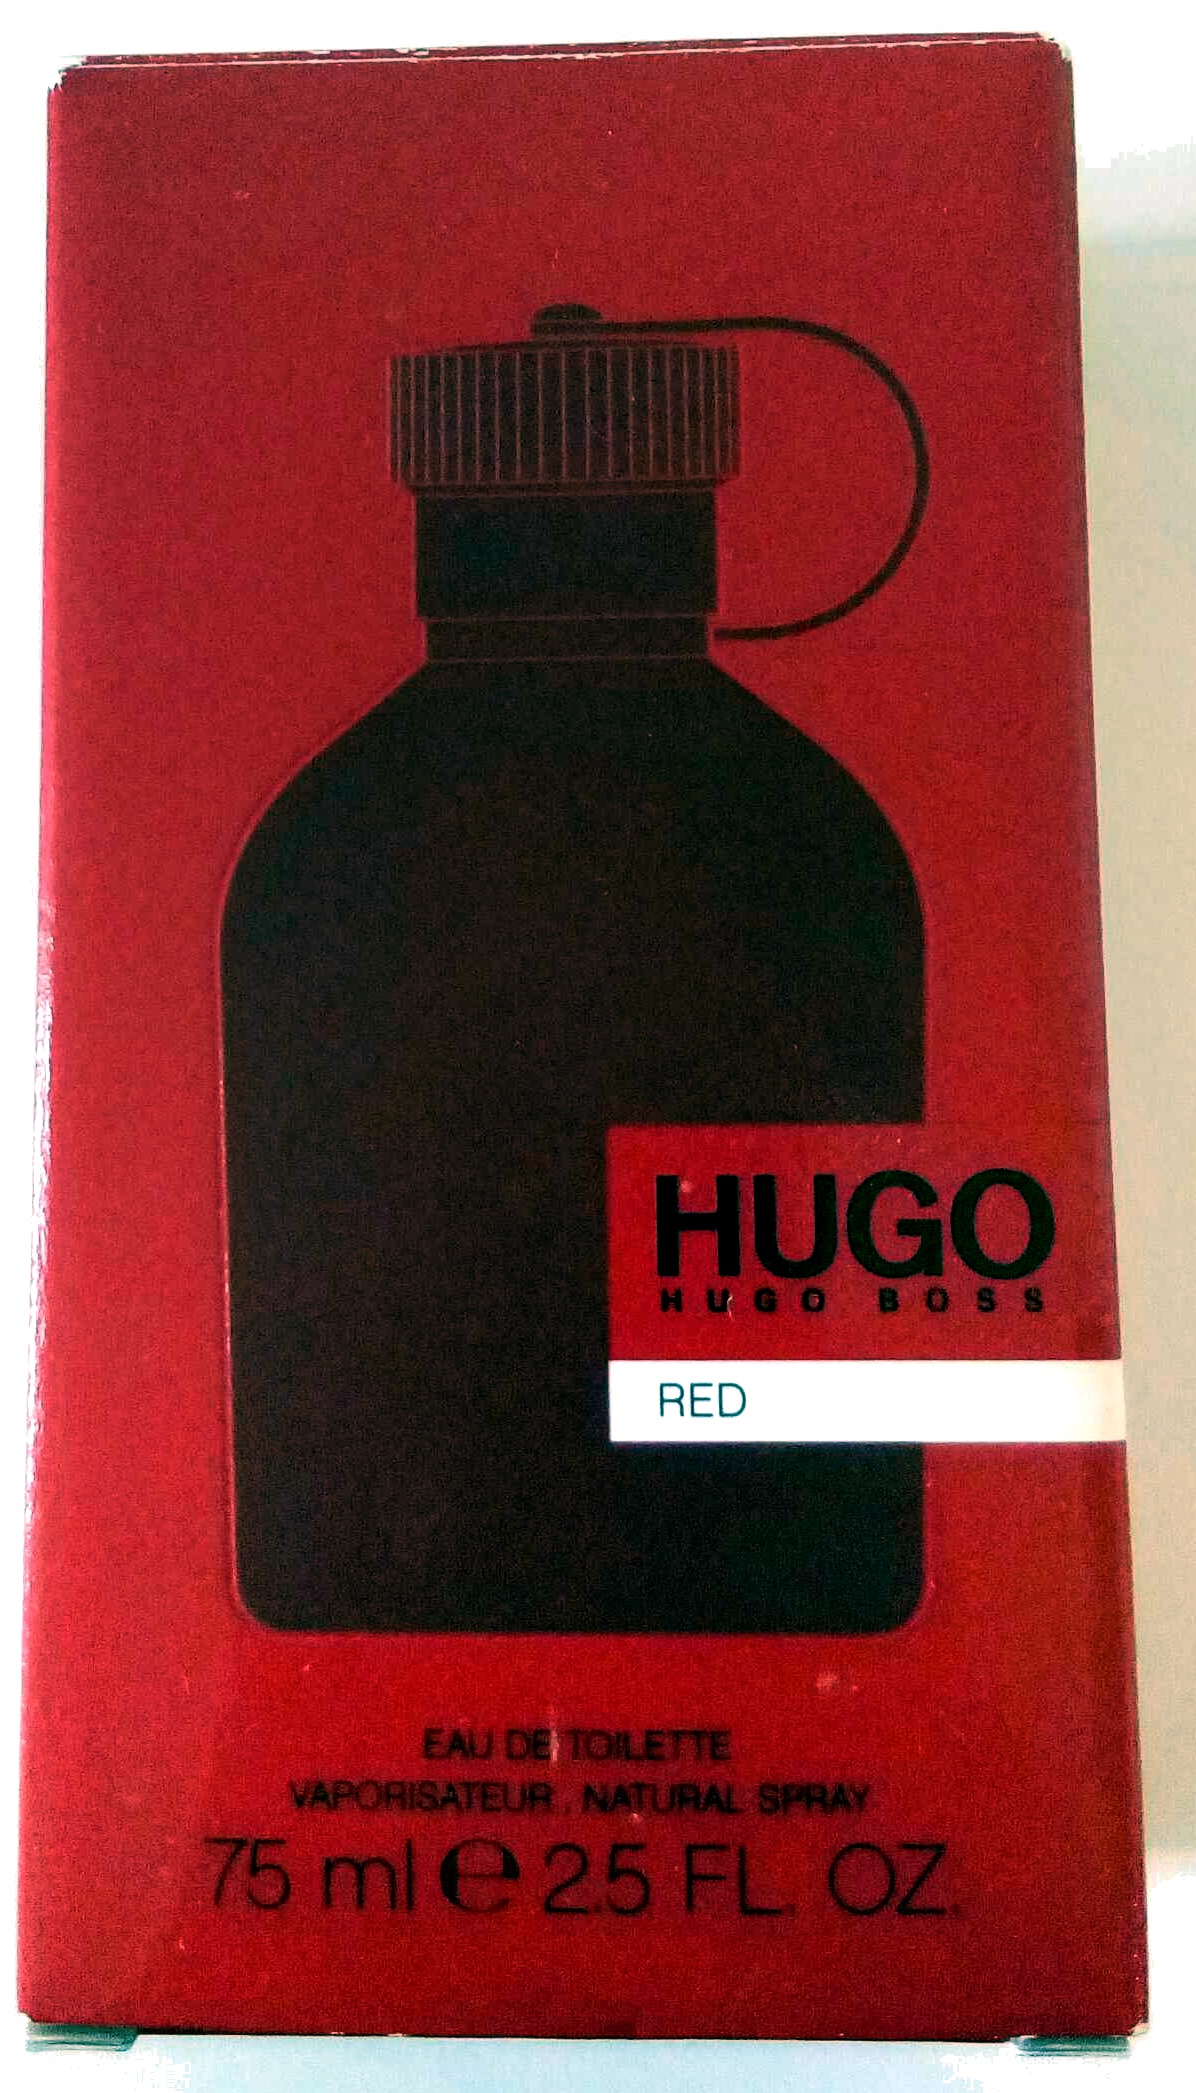 Hugo Boss RED - Product - fr